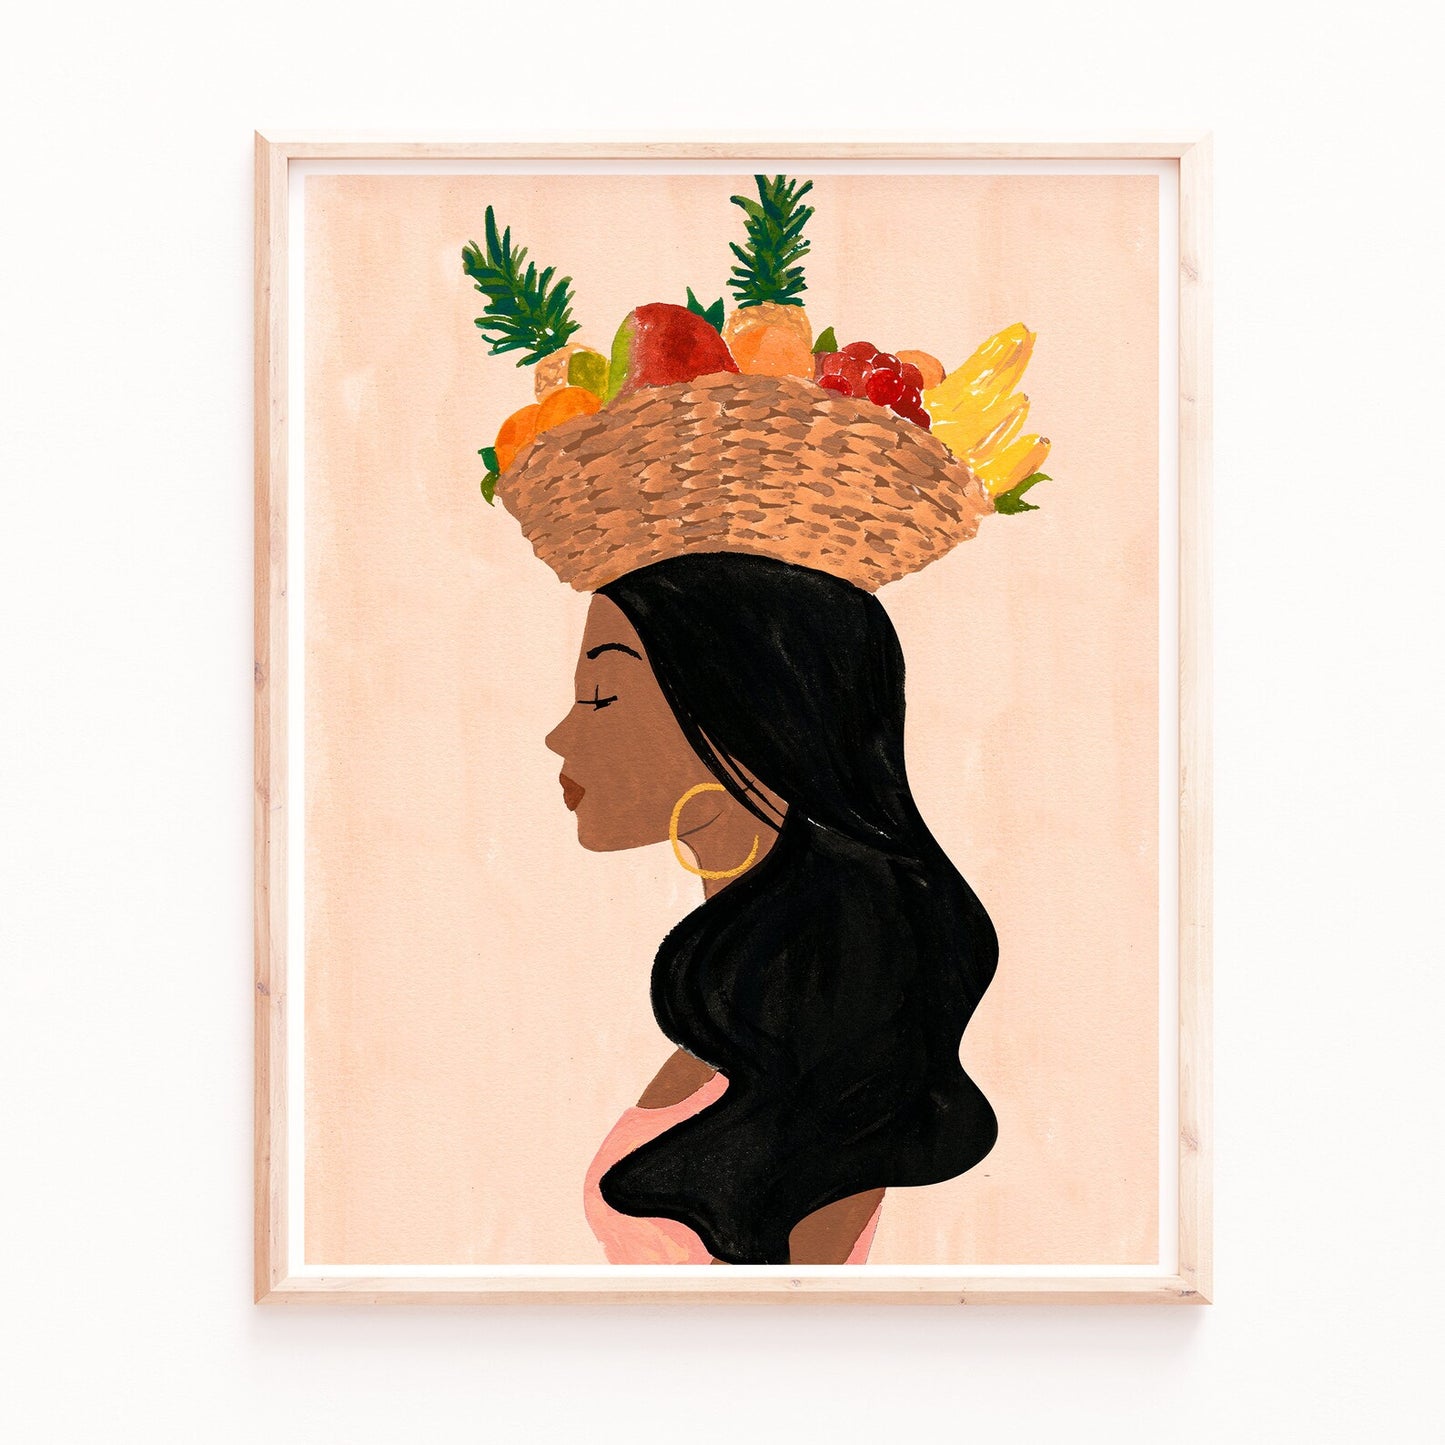 Valentina's Fruit Basket Art Print 8x10"